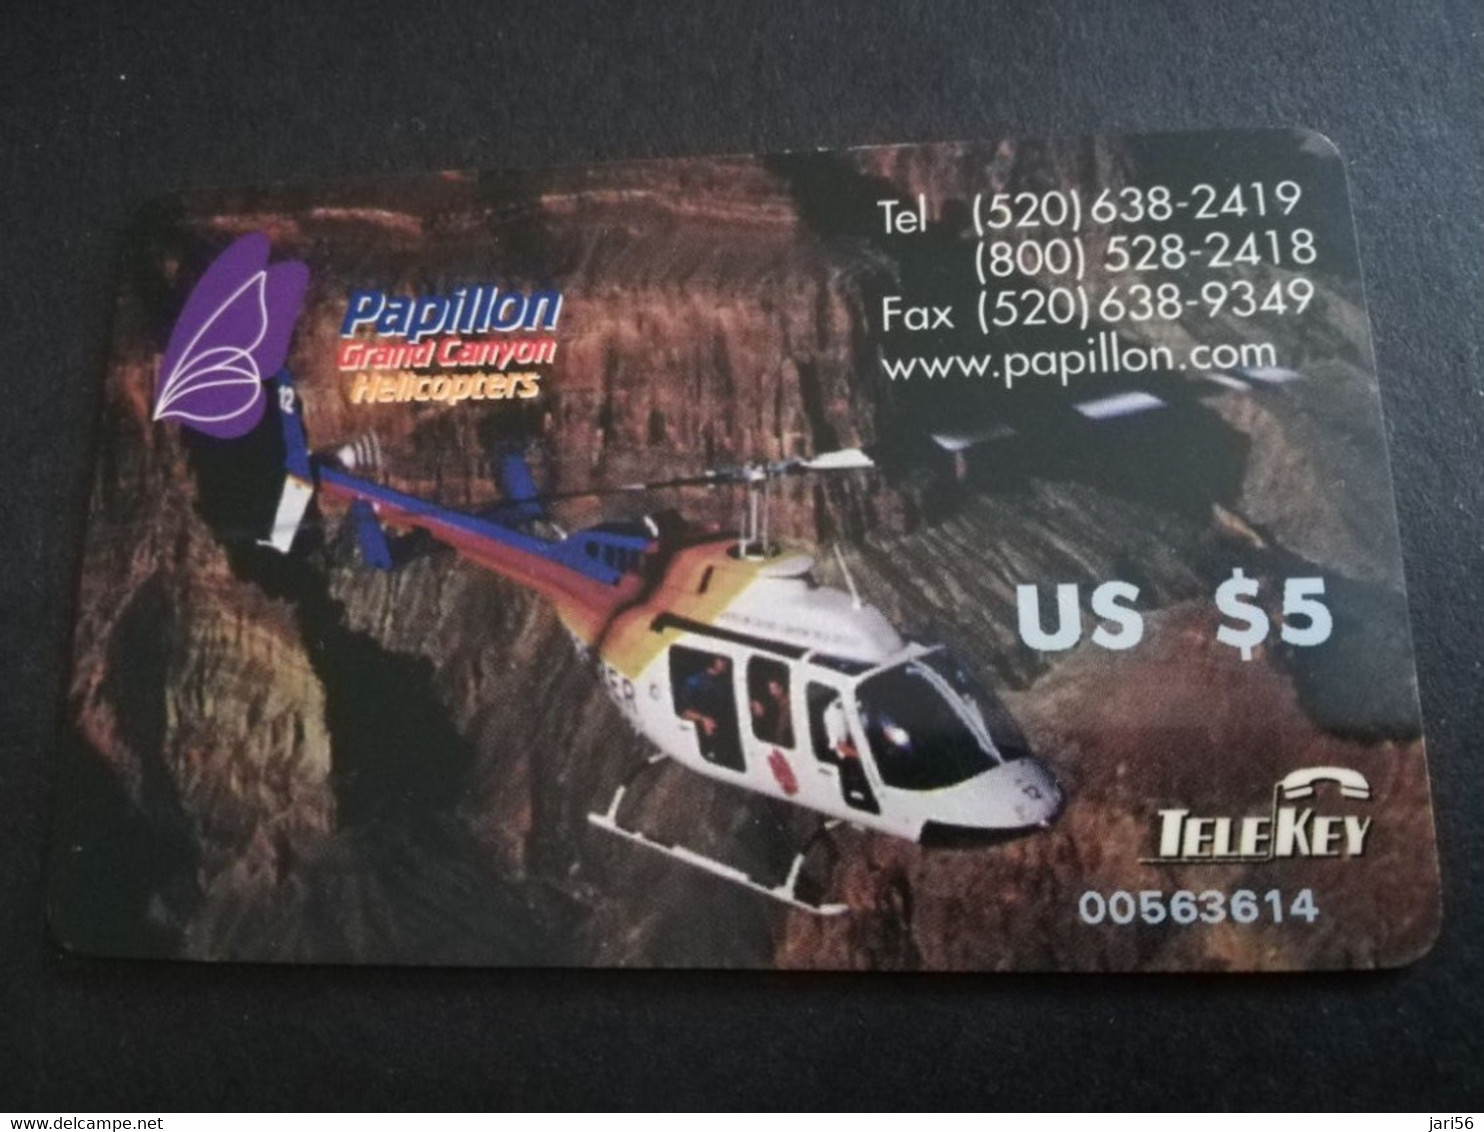 UNITED STATES AMERICA   $ 5,- TELEKEY PAPILLON GRAND CANYON HELICOPTERS     PREPAID Used Card     ** 5439** - Amerivox